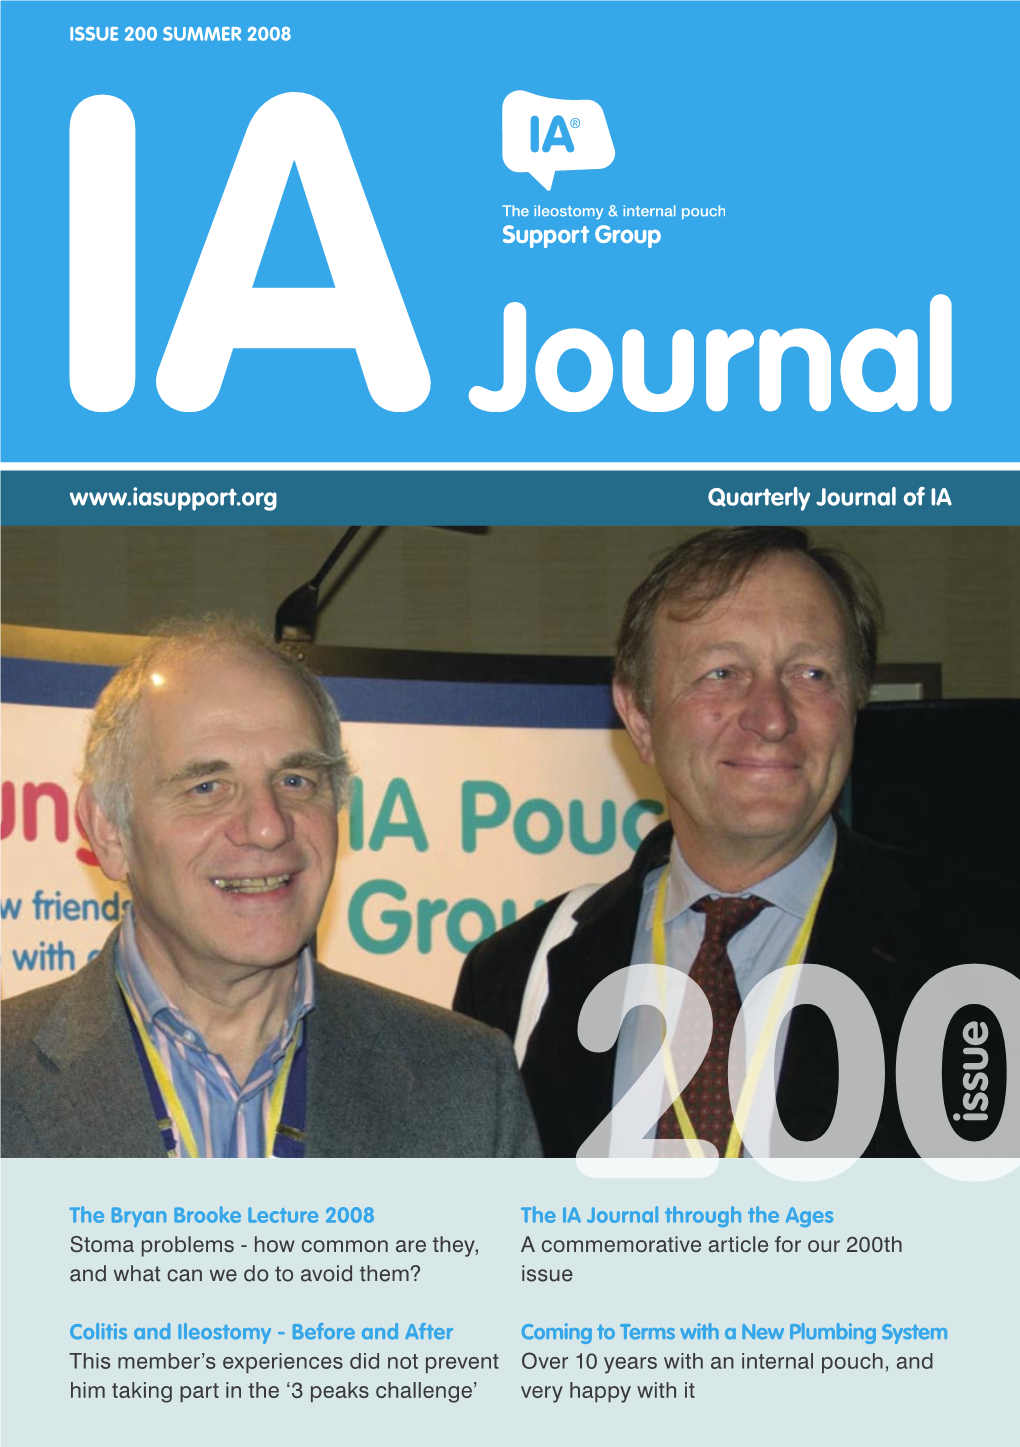 IA Journal 200.Indd